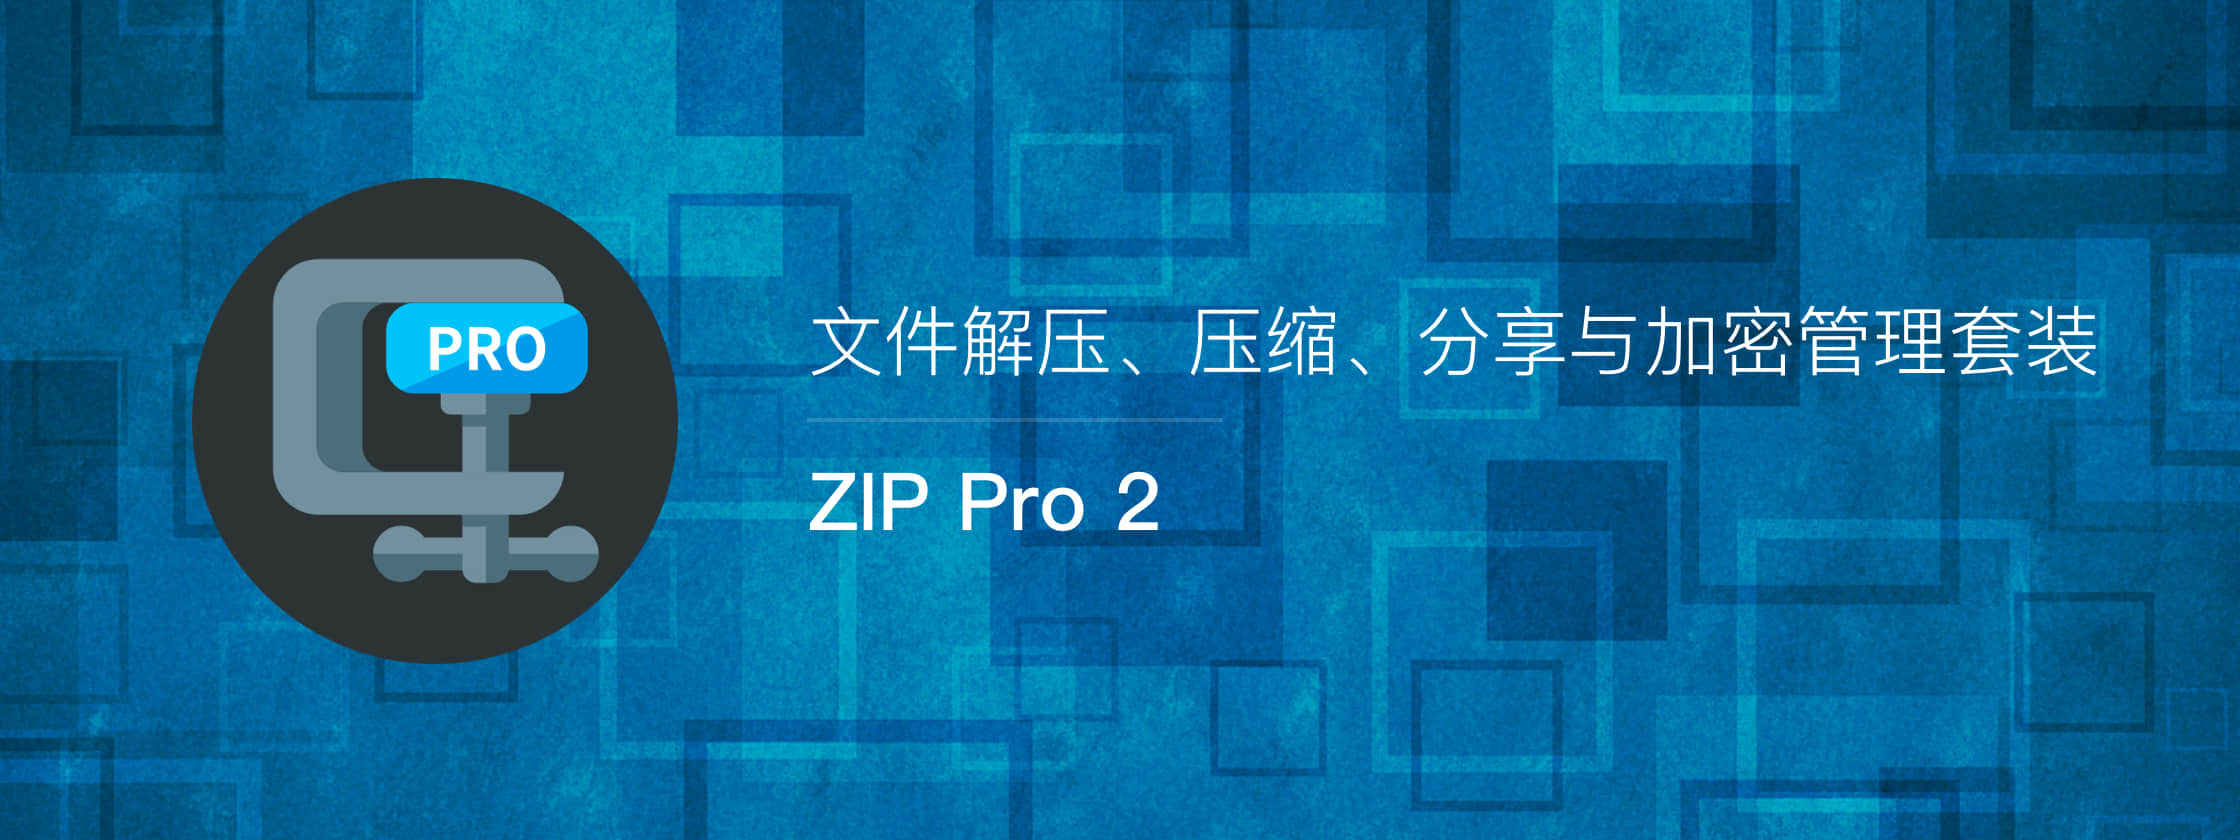 ZIP Pro 2，全能文件管理套装